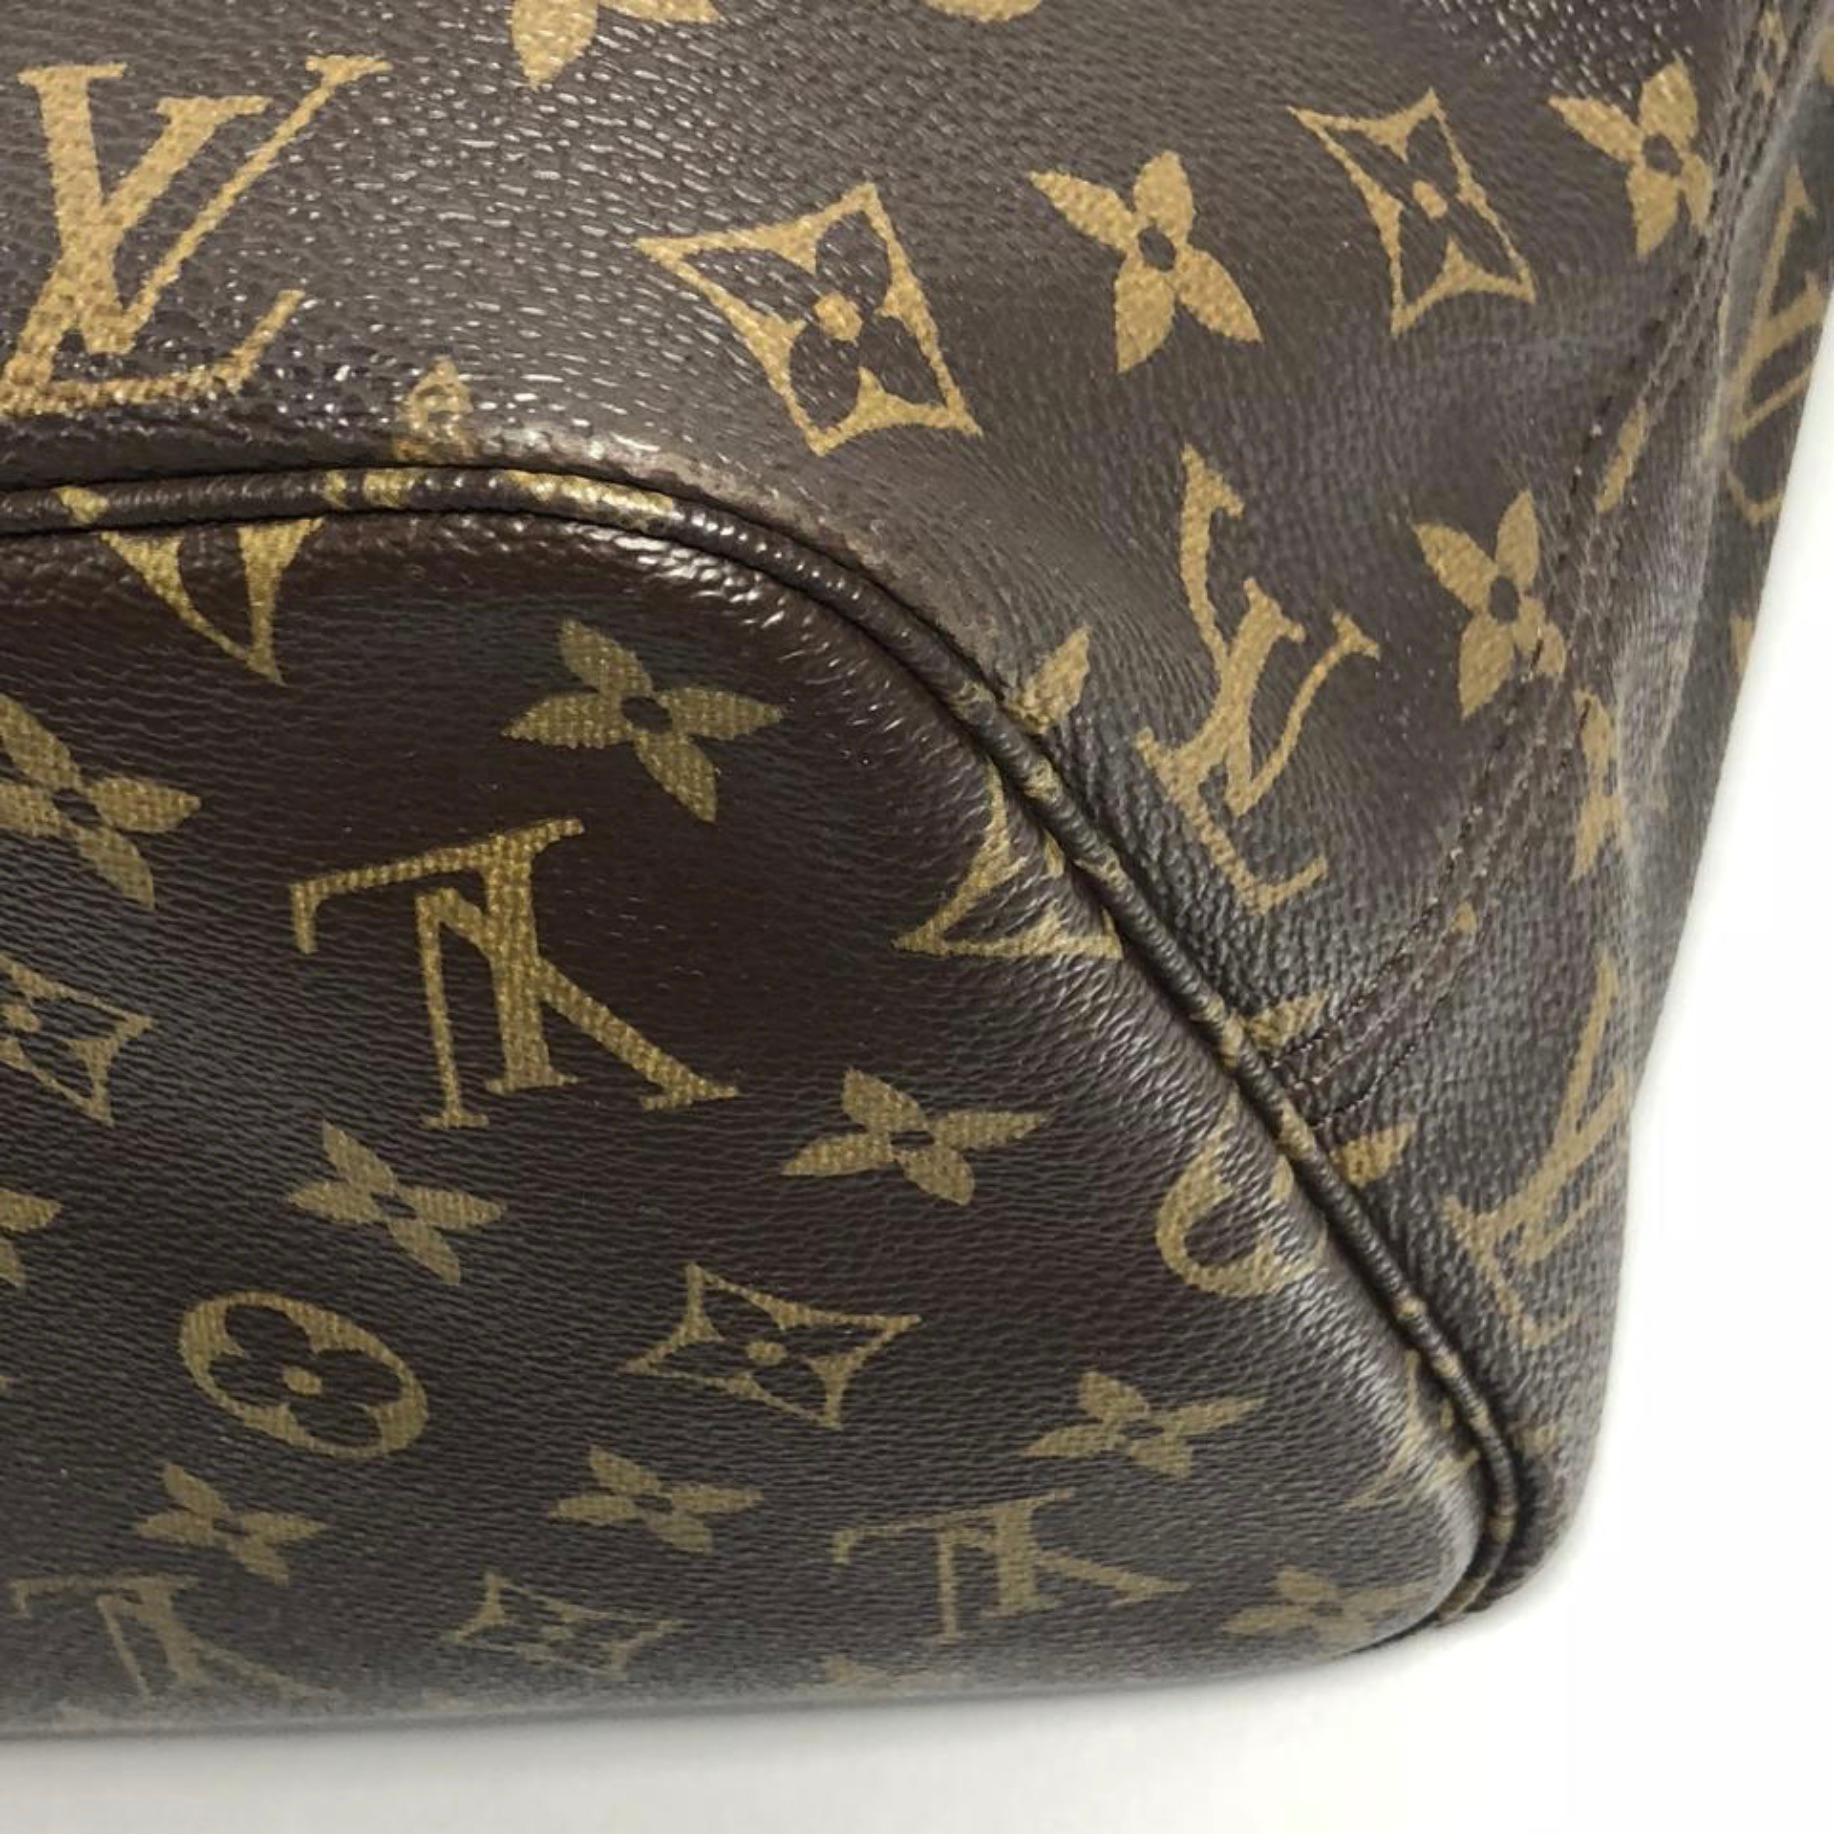  Louis Vuitton Monogram Neverfull MM Tote Shoulder Handbag For Sale 2